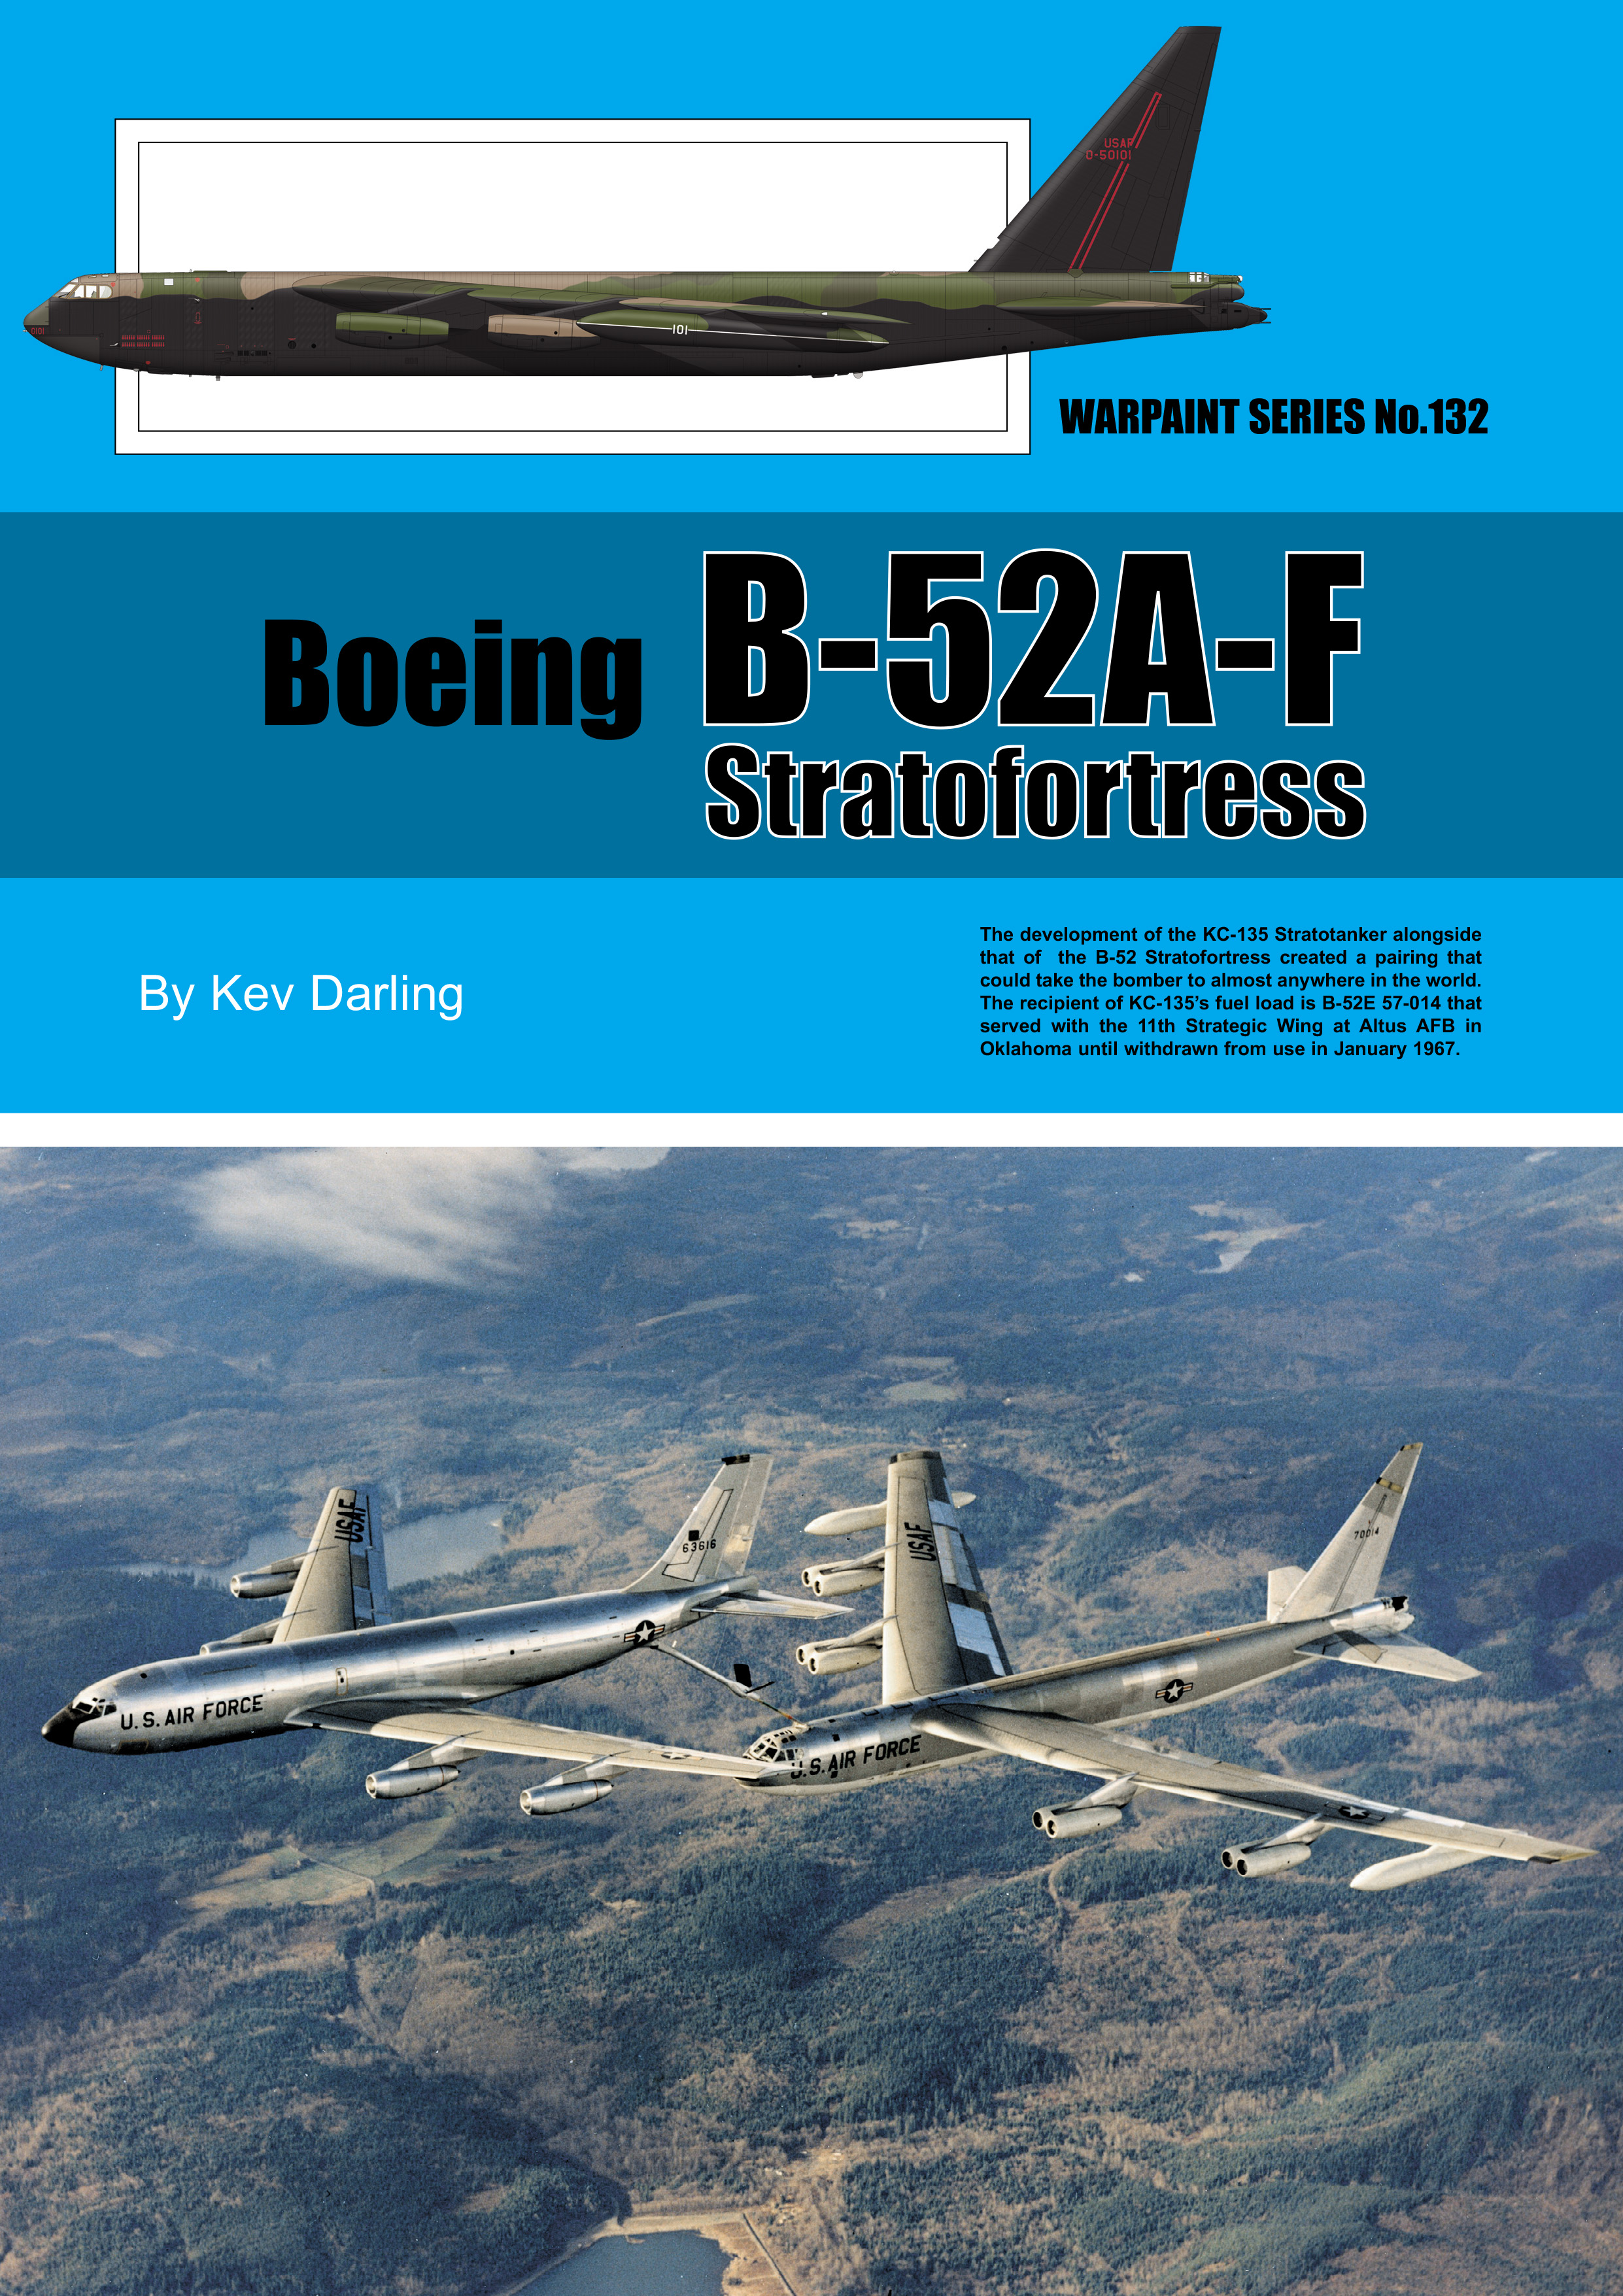 Guideline Publications Warpaint 132 - B52A-F Boeing B-52A-F 